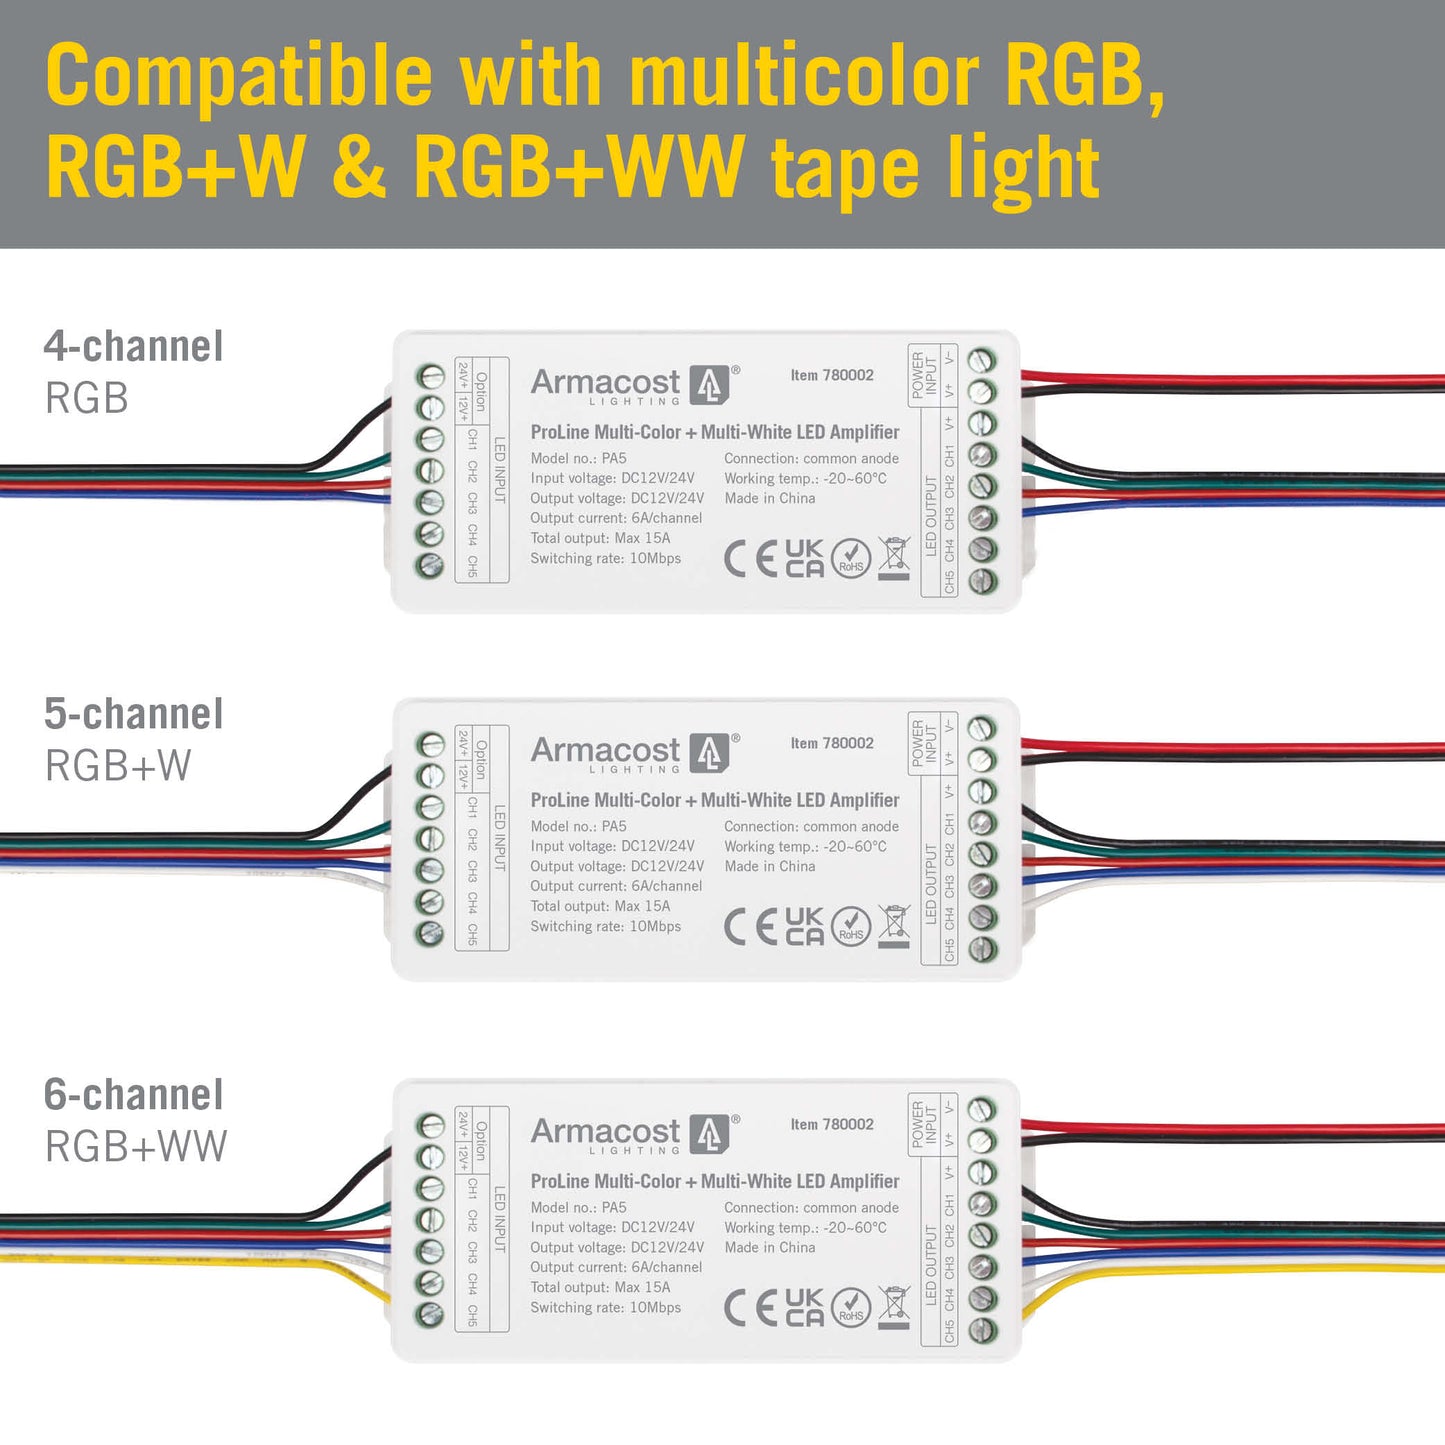 ProLine Multicolor LED Amplifier